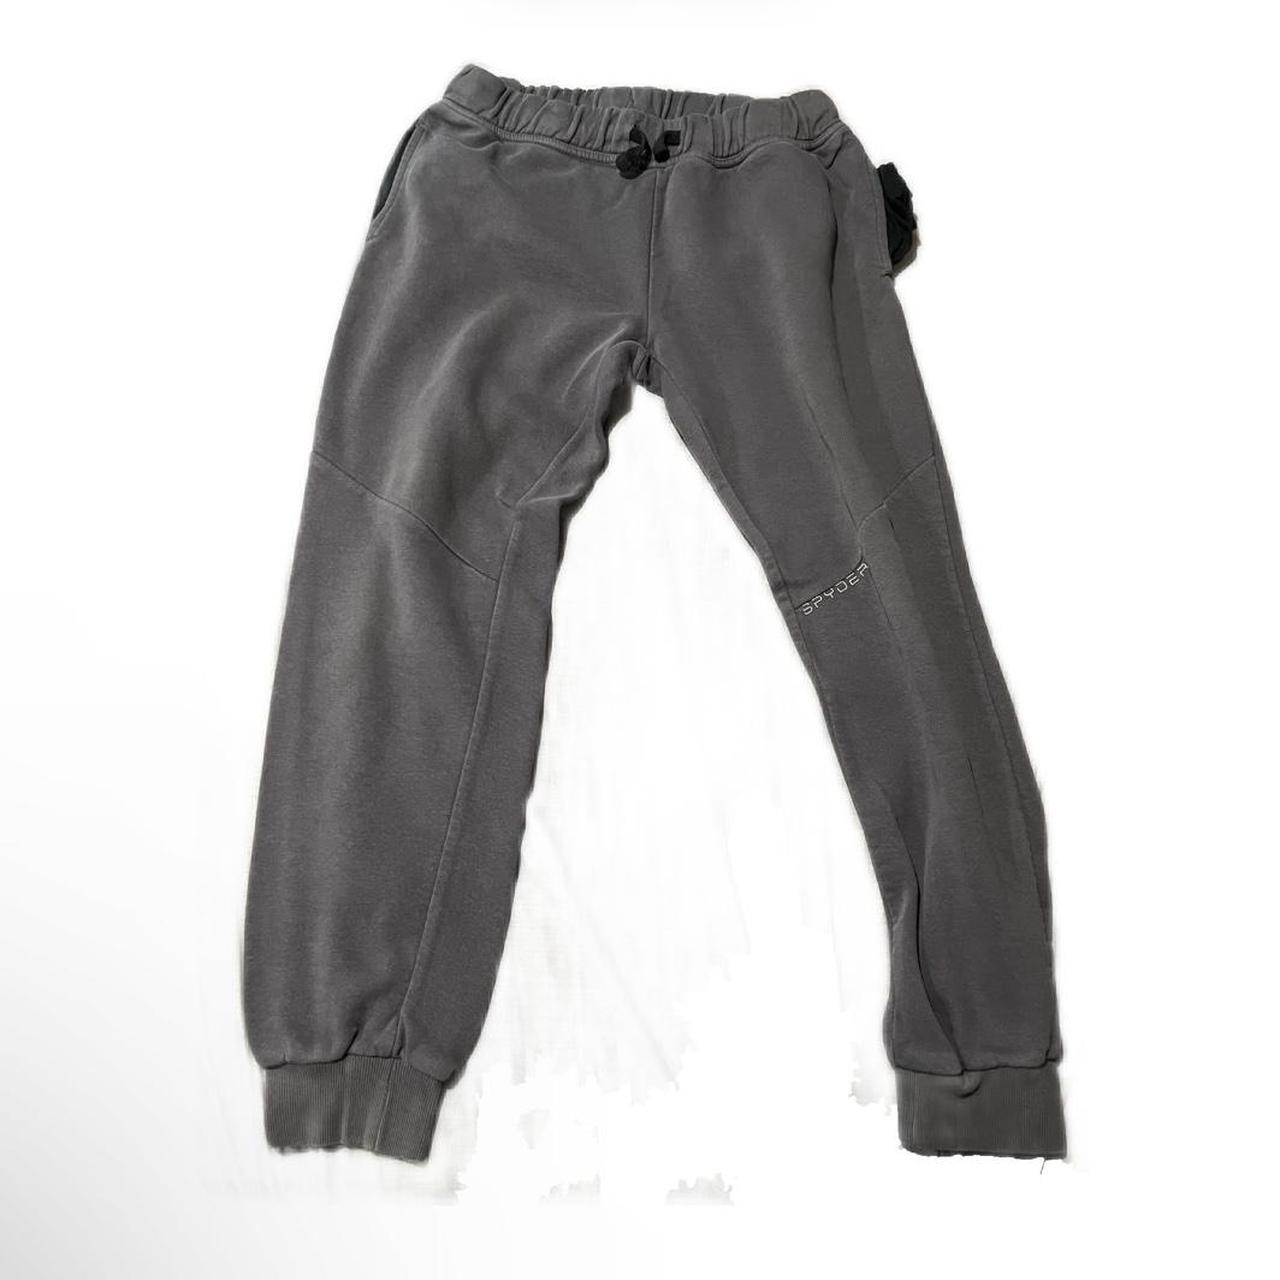 💎 Sweatpants 💎 brand: SPYDER 💎 size: men’s Medium 💎... - Depop